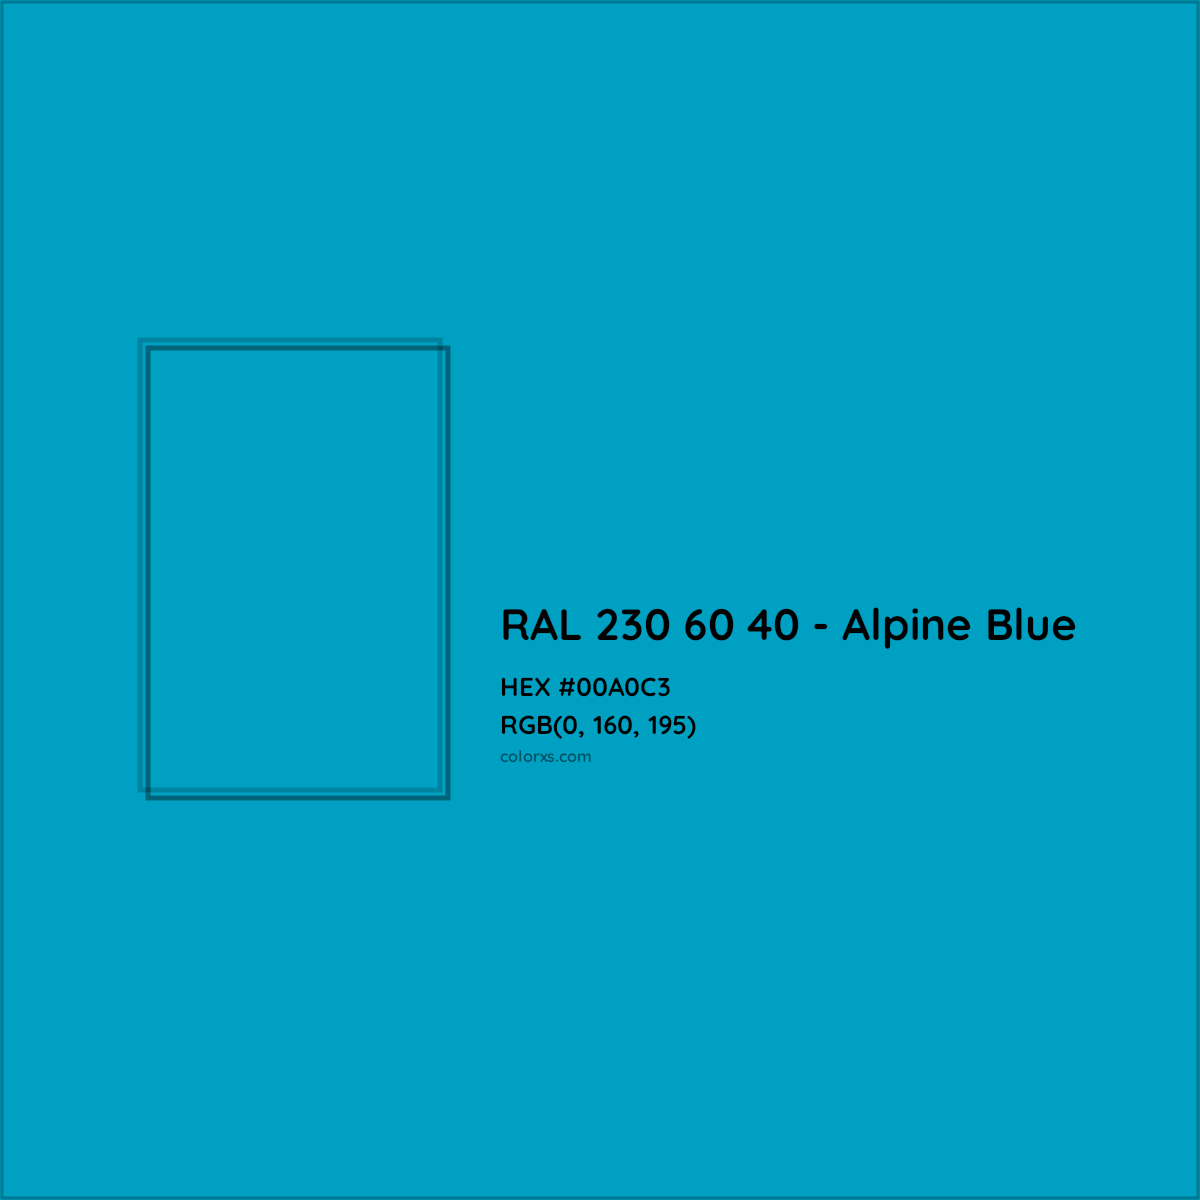 HEX #00A0C3 RAL 230 60 40 - Alpine Blue CMS RAL Design - Color Code